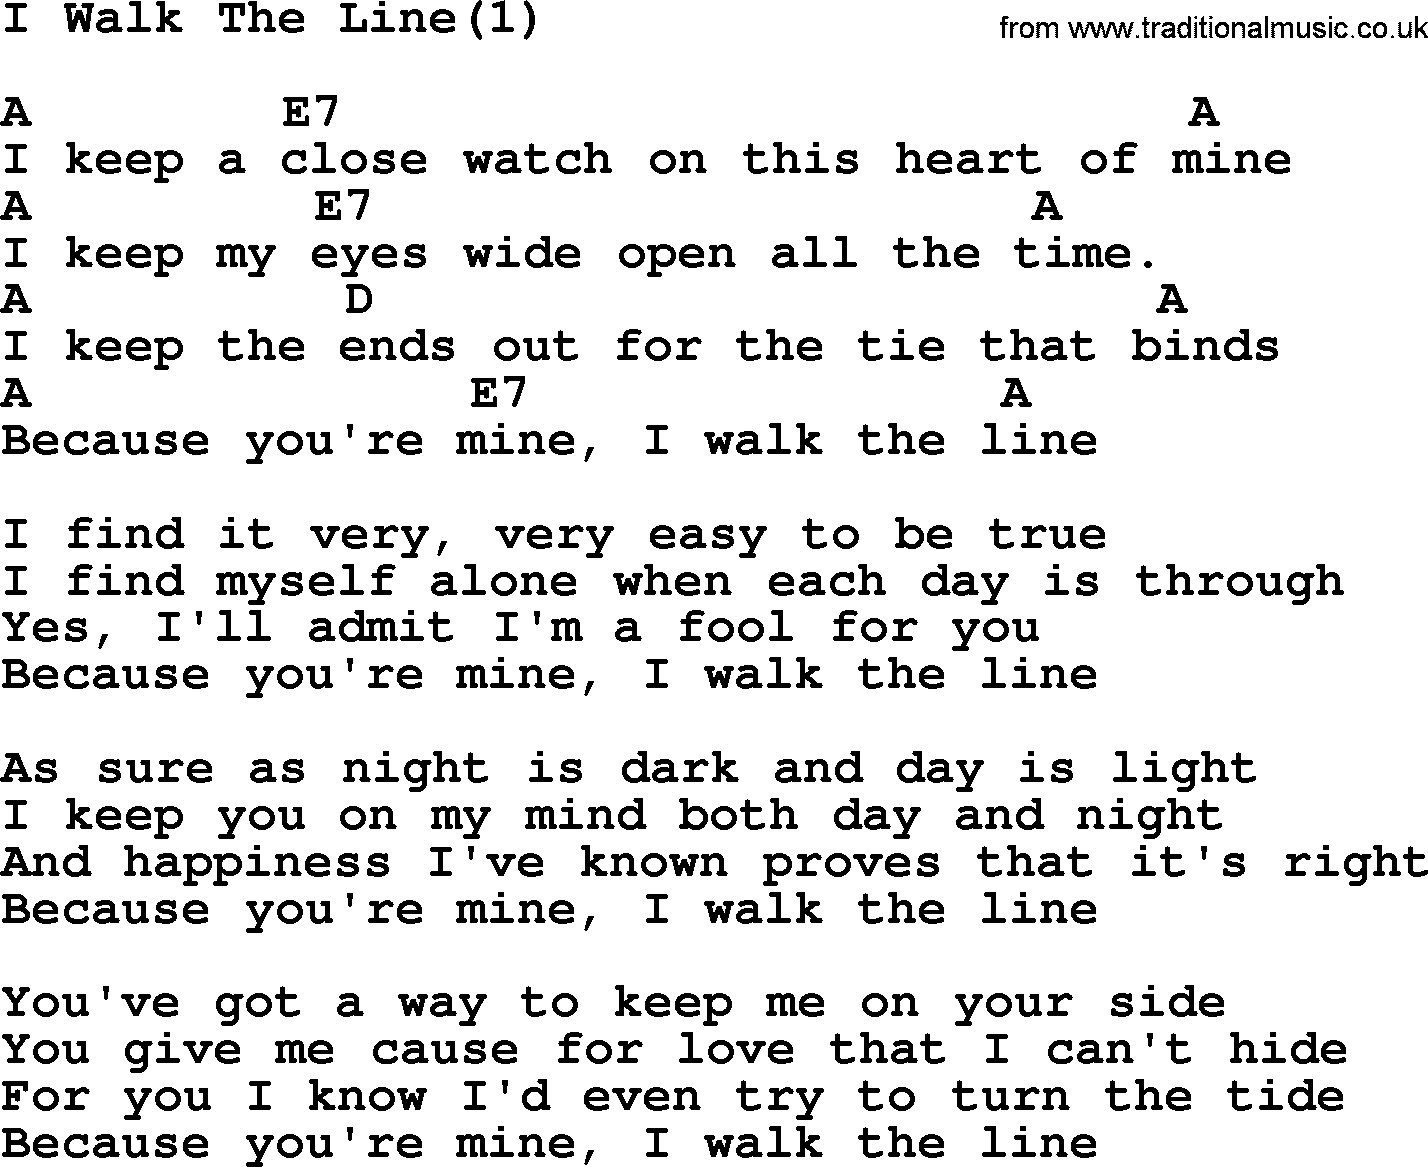 Johnny Cash song I Walk The Line(1), lyrics and chords